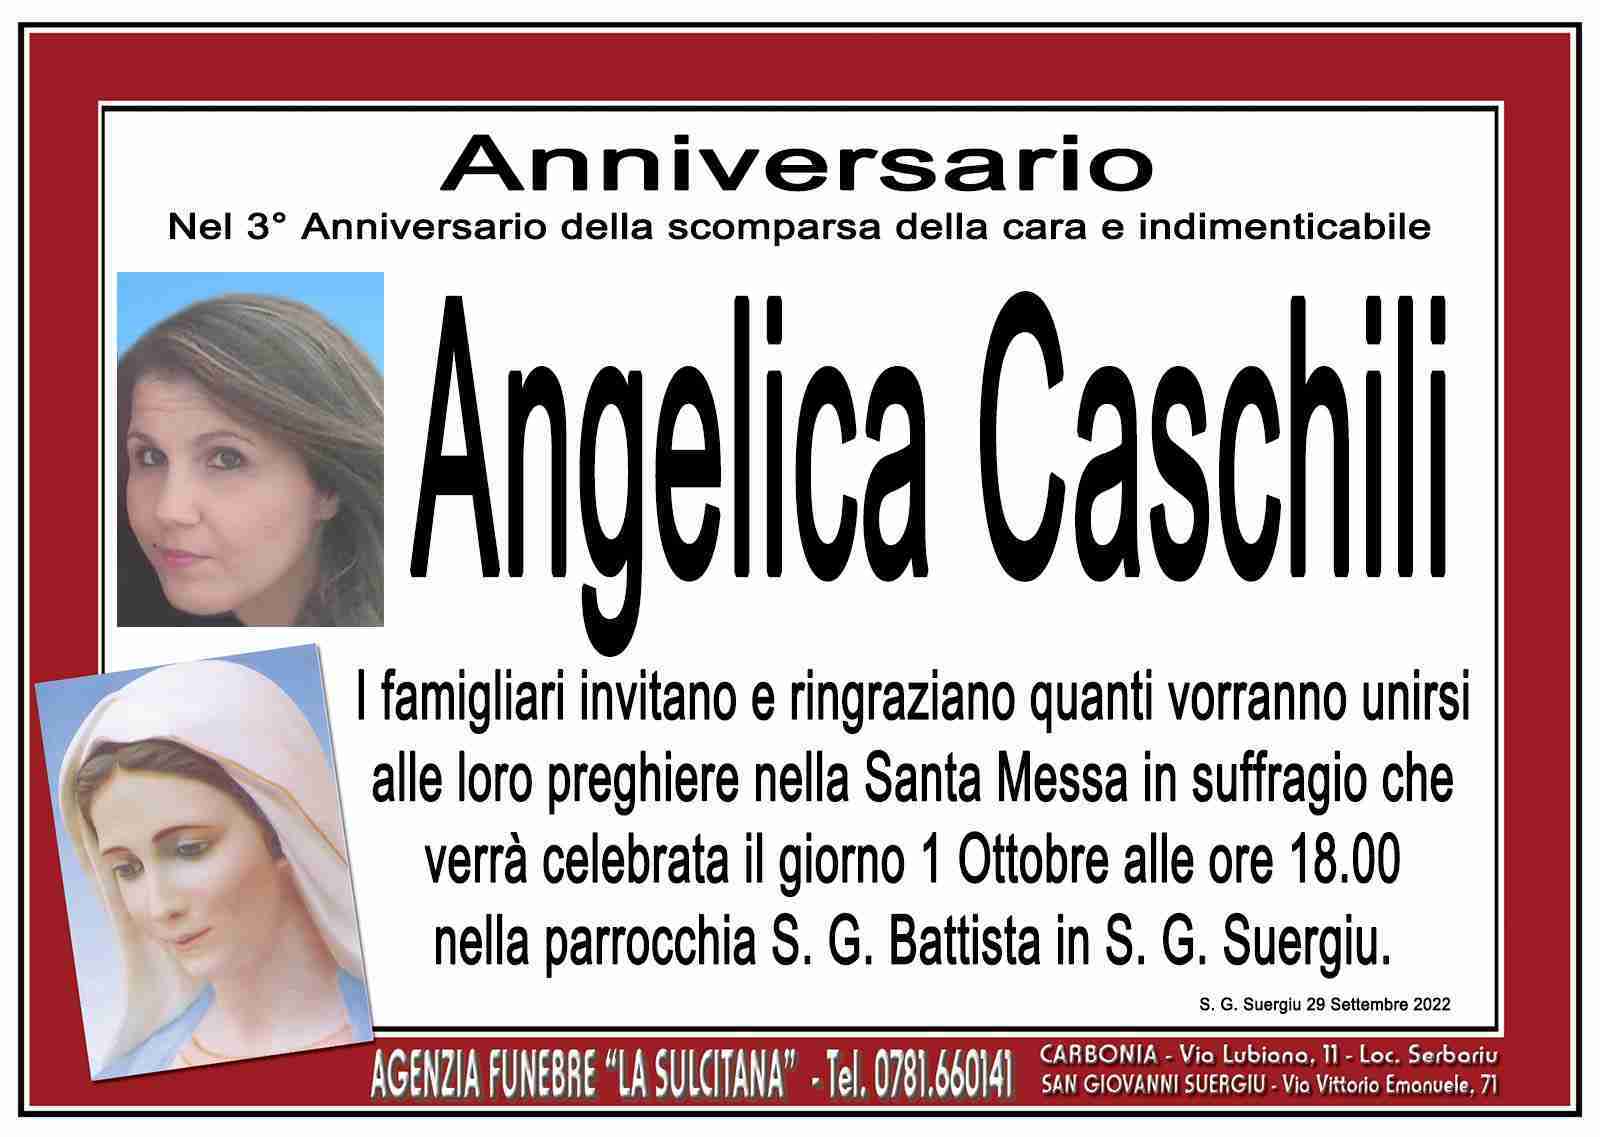 Angelica Caschili